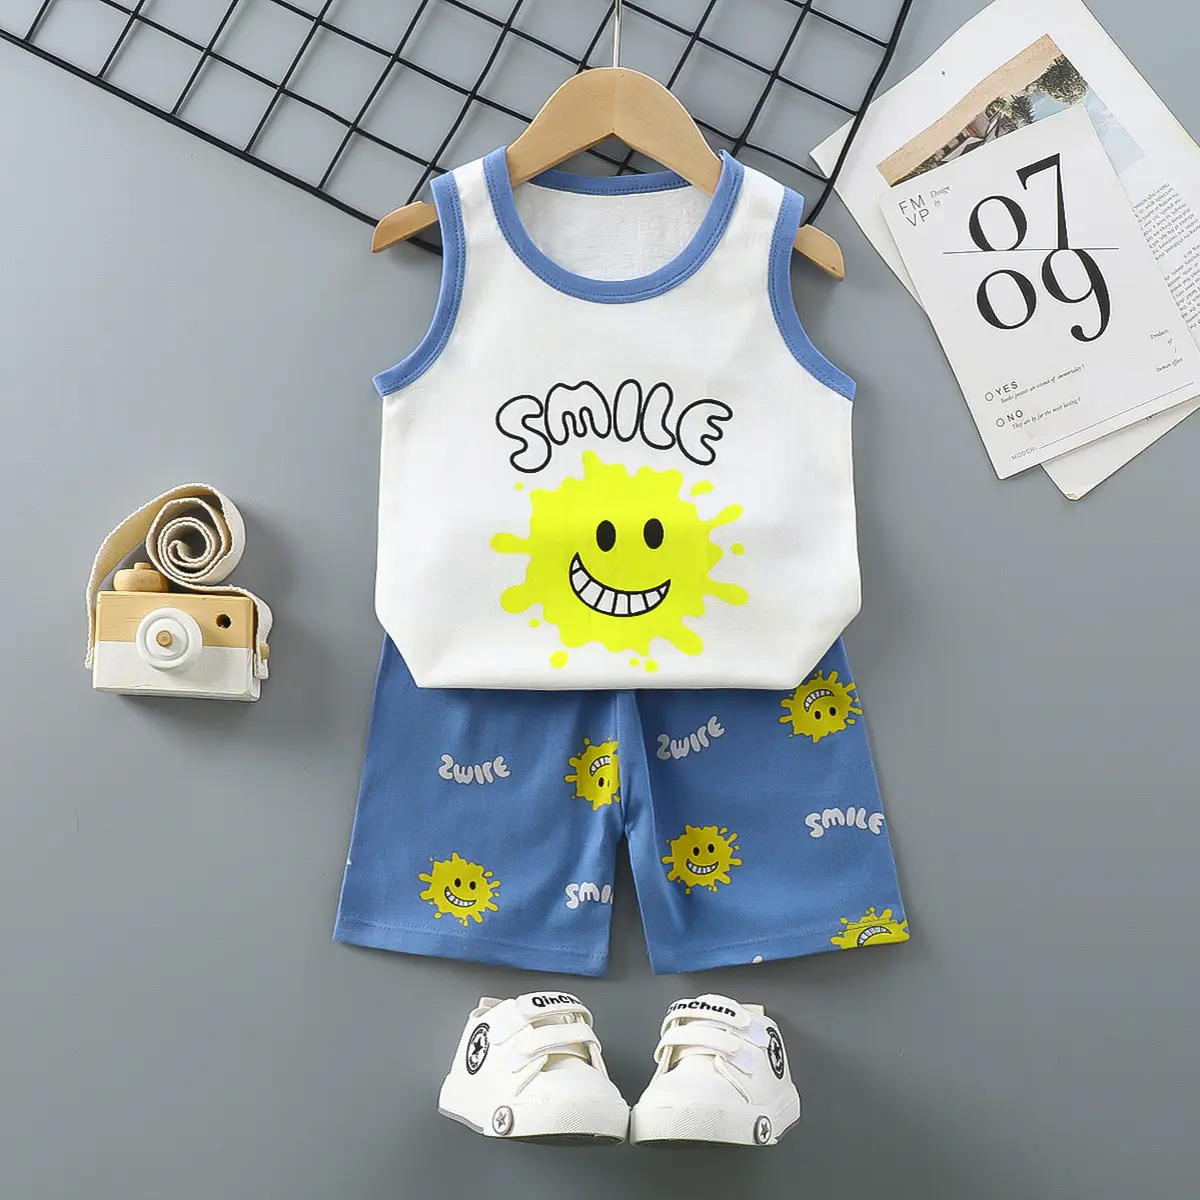 Summer children's t-shirt shorts sets boy girl baby clothing sets wholesale kids clothes newborn clothes sets